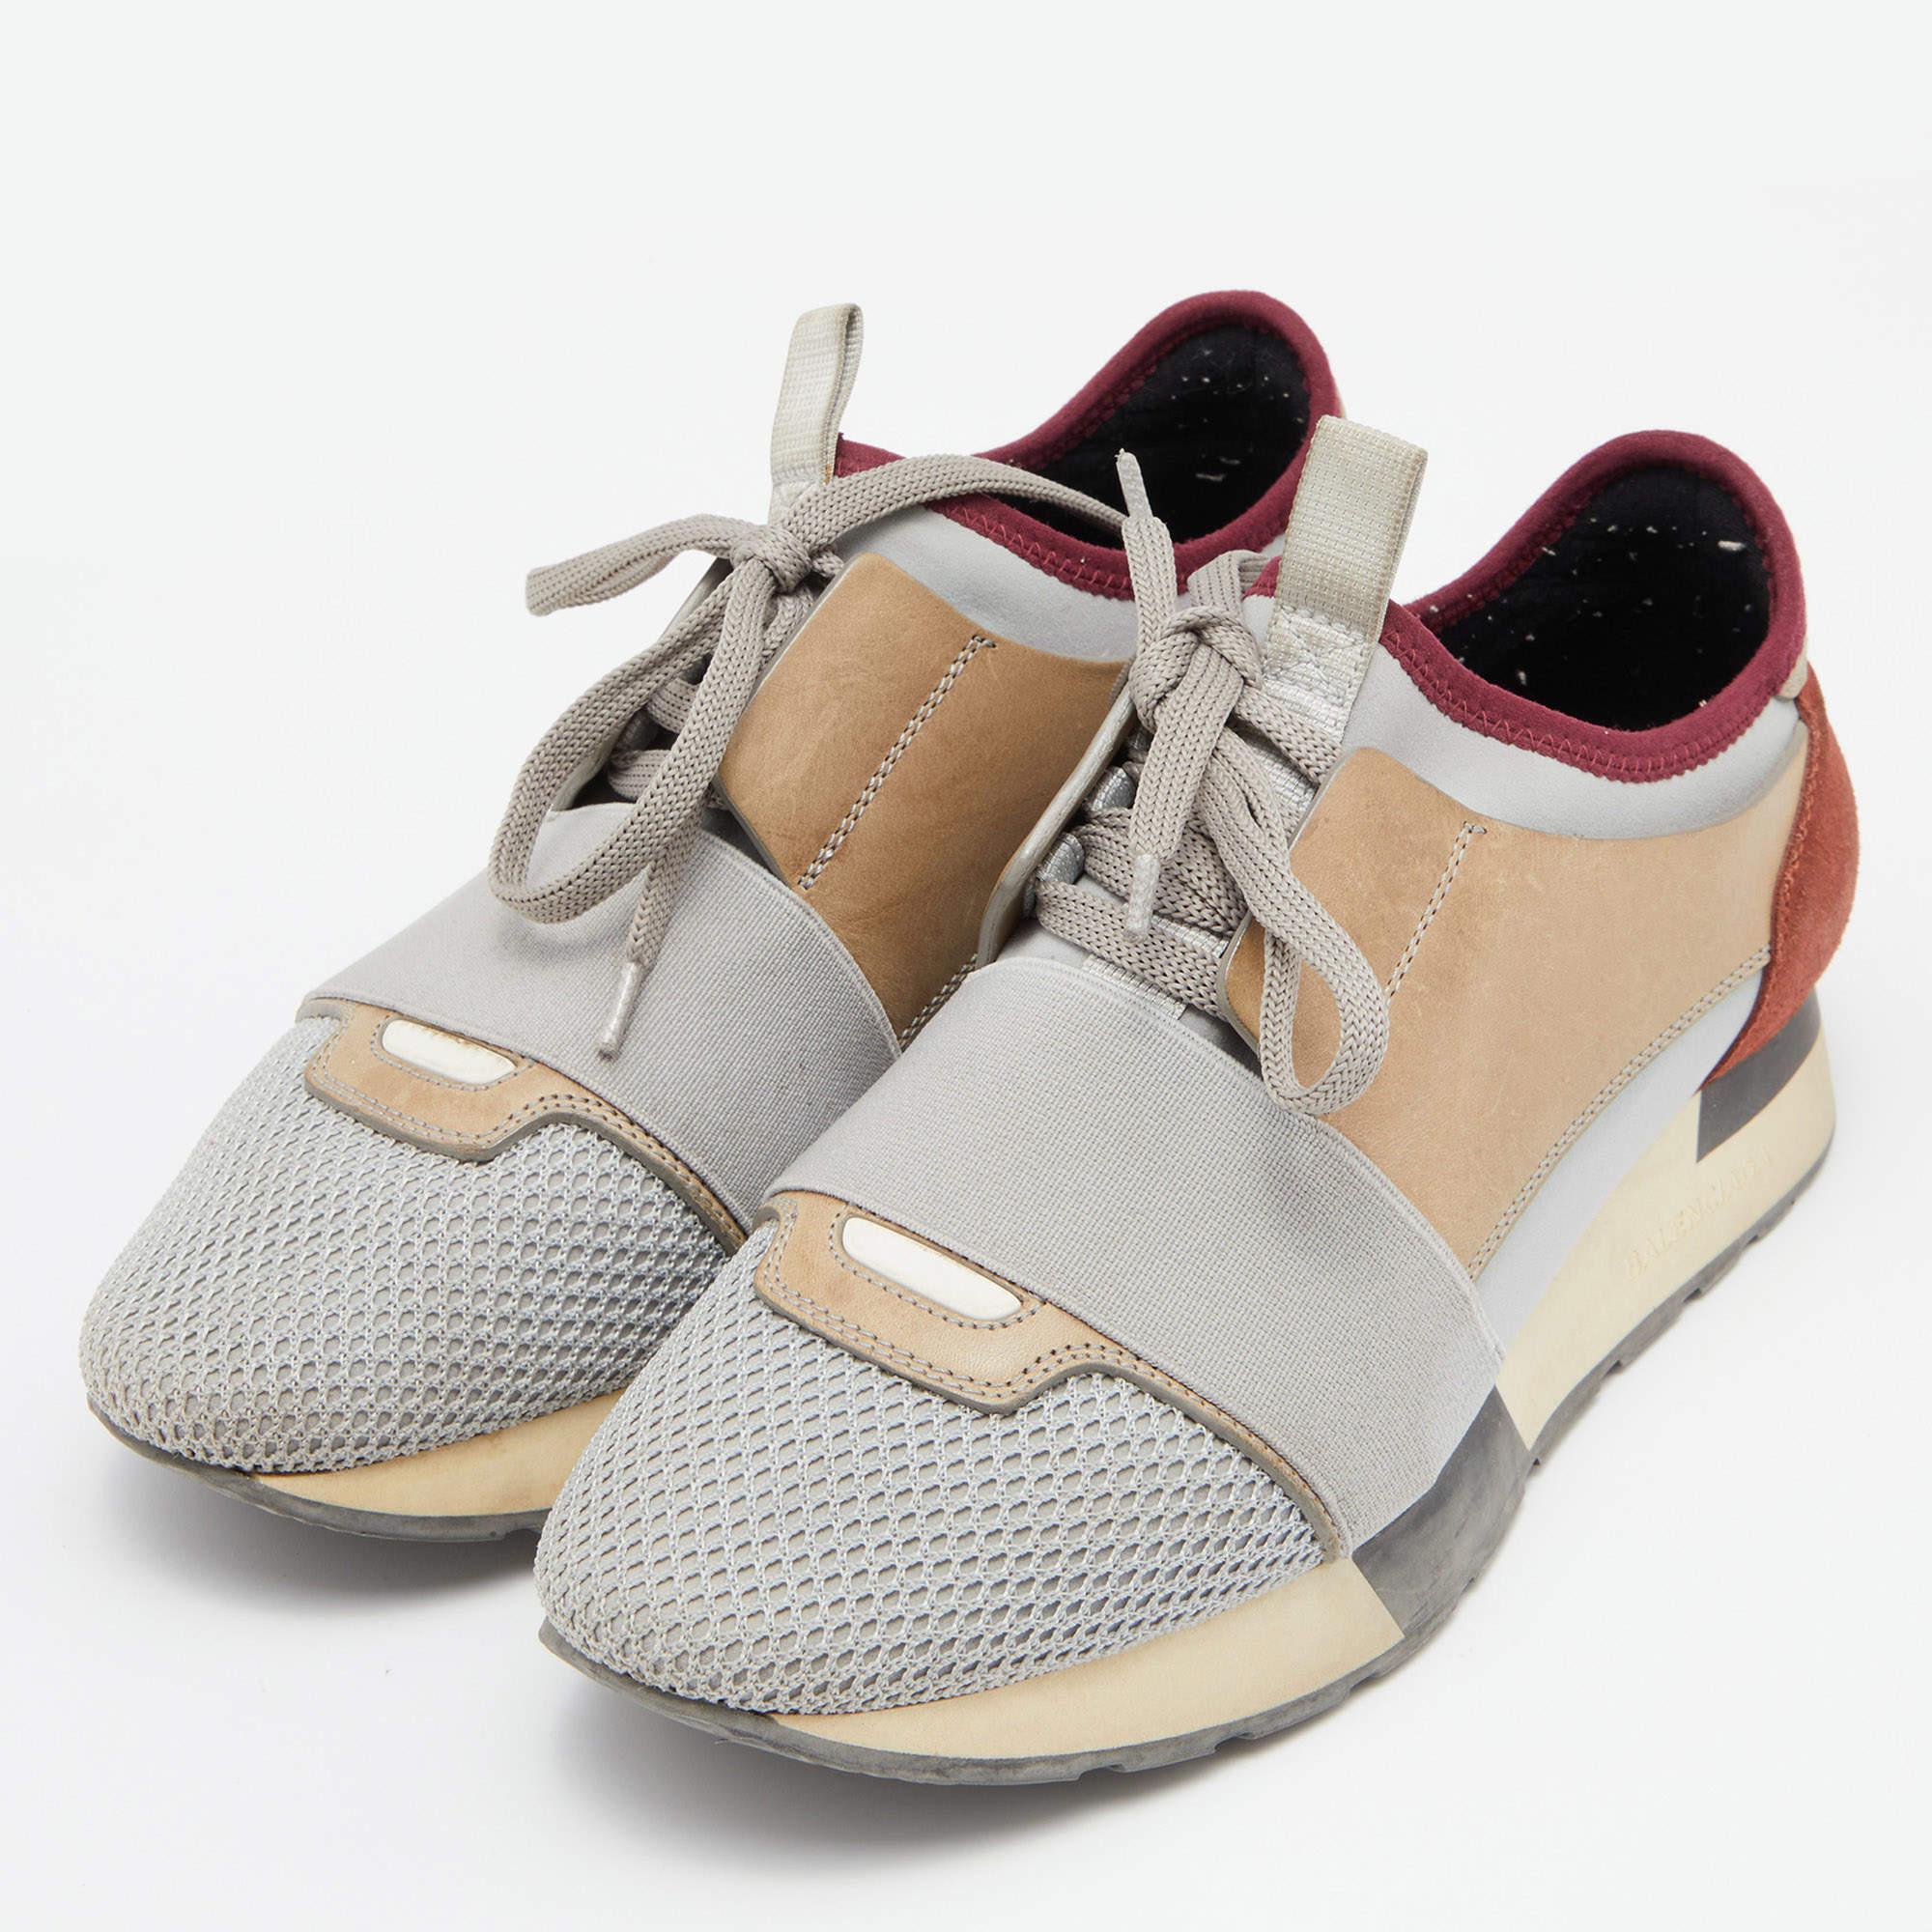 Balenciaga Multicolor Mesh and Leather Race Runner Sneakers Size 37 In Good Condition For Sale In Dubai, Al Qouz 2